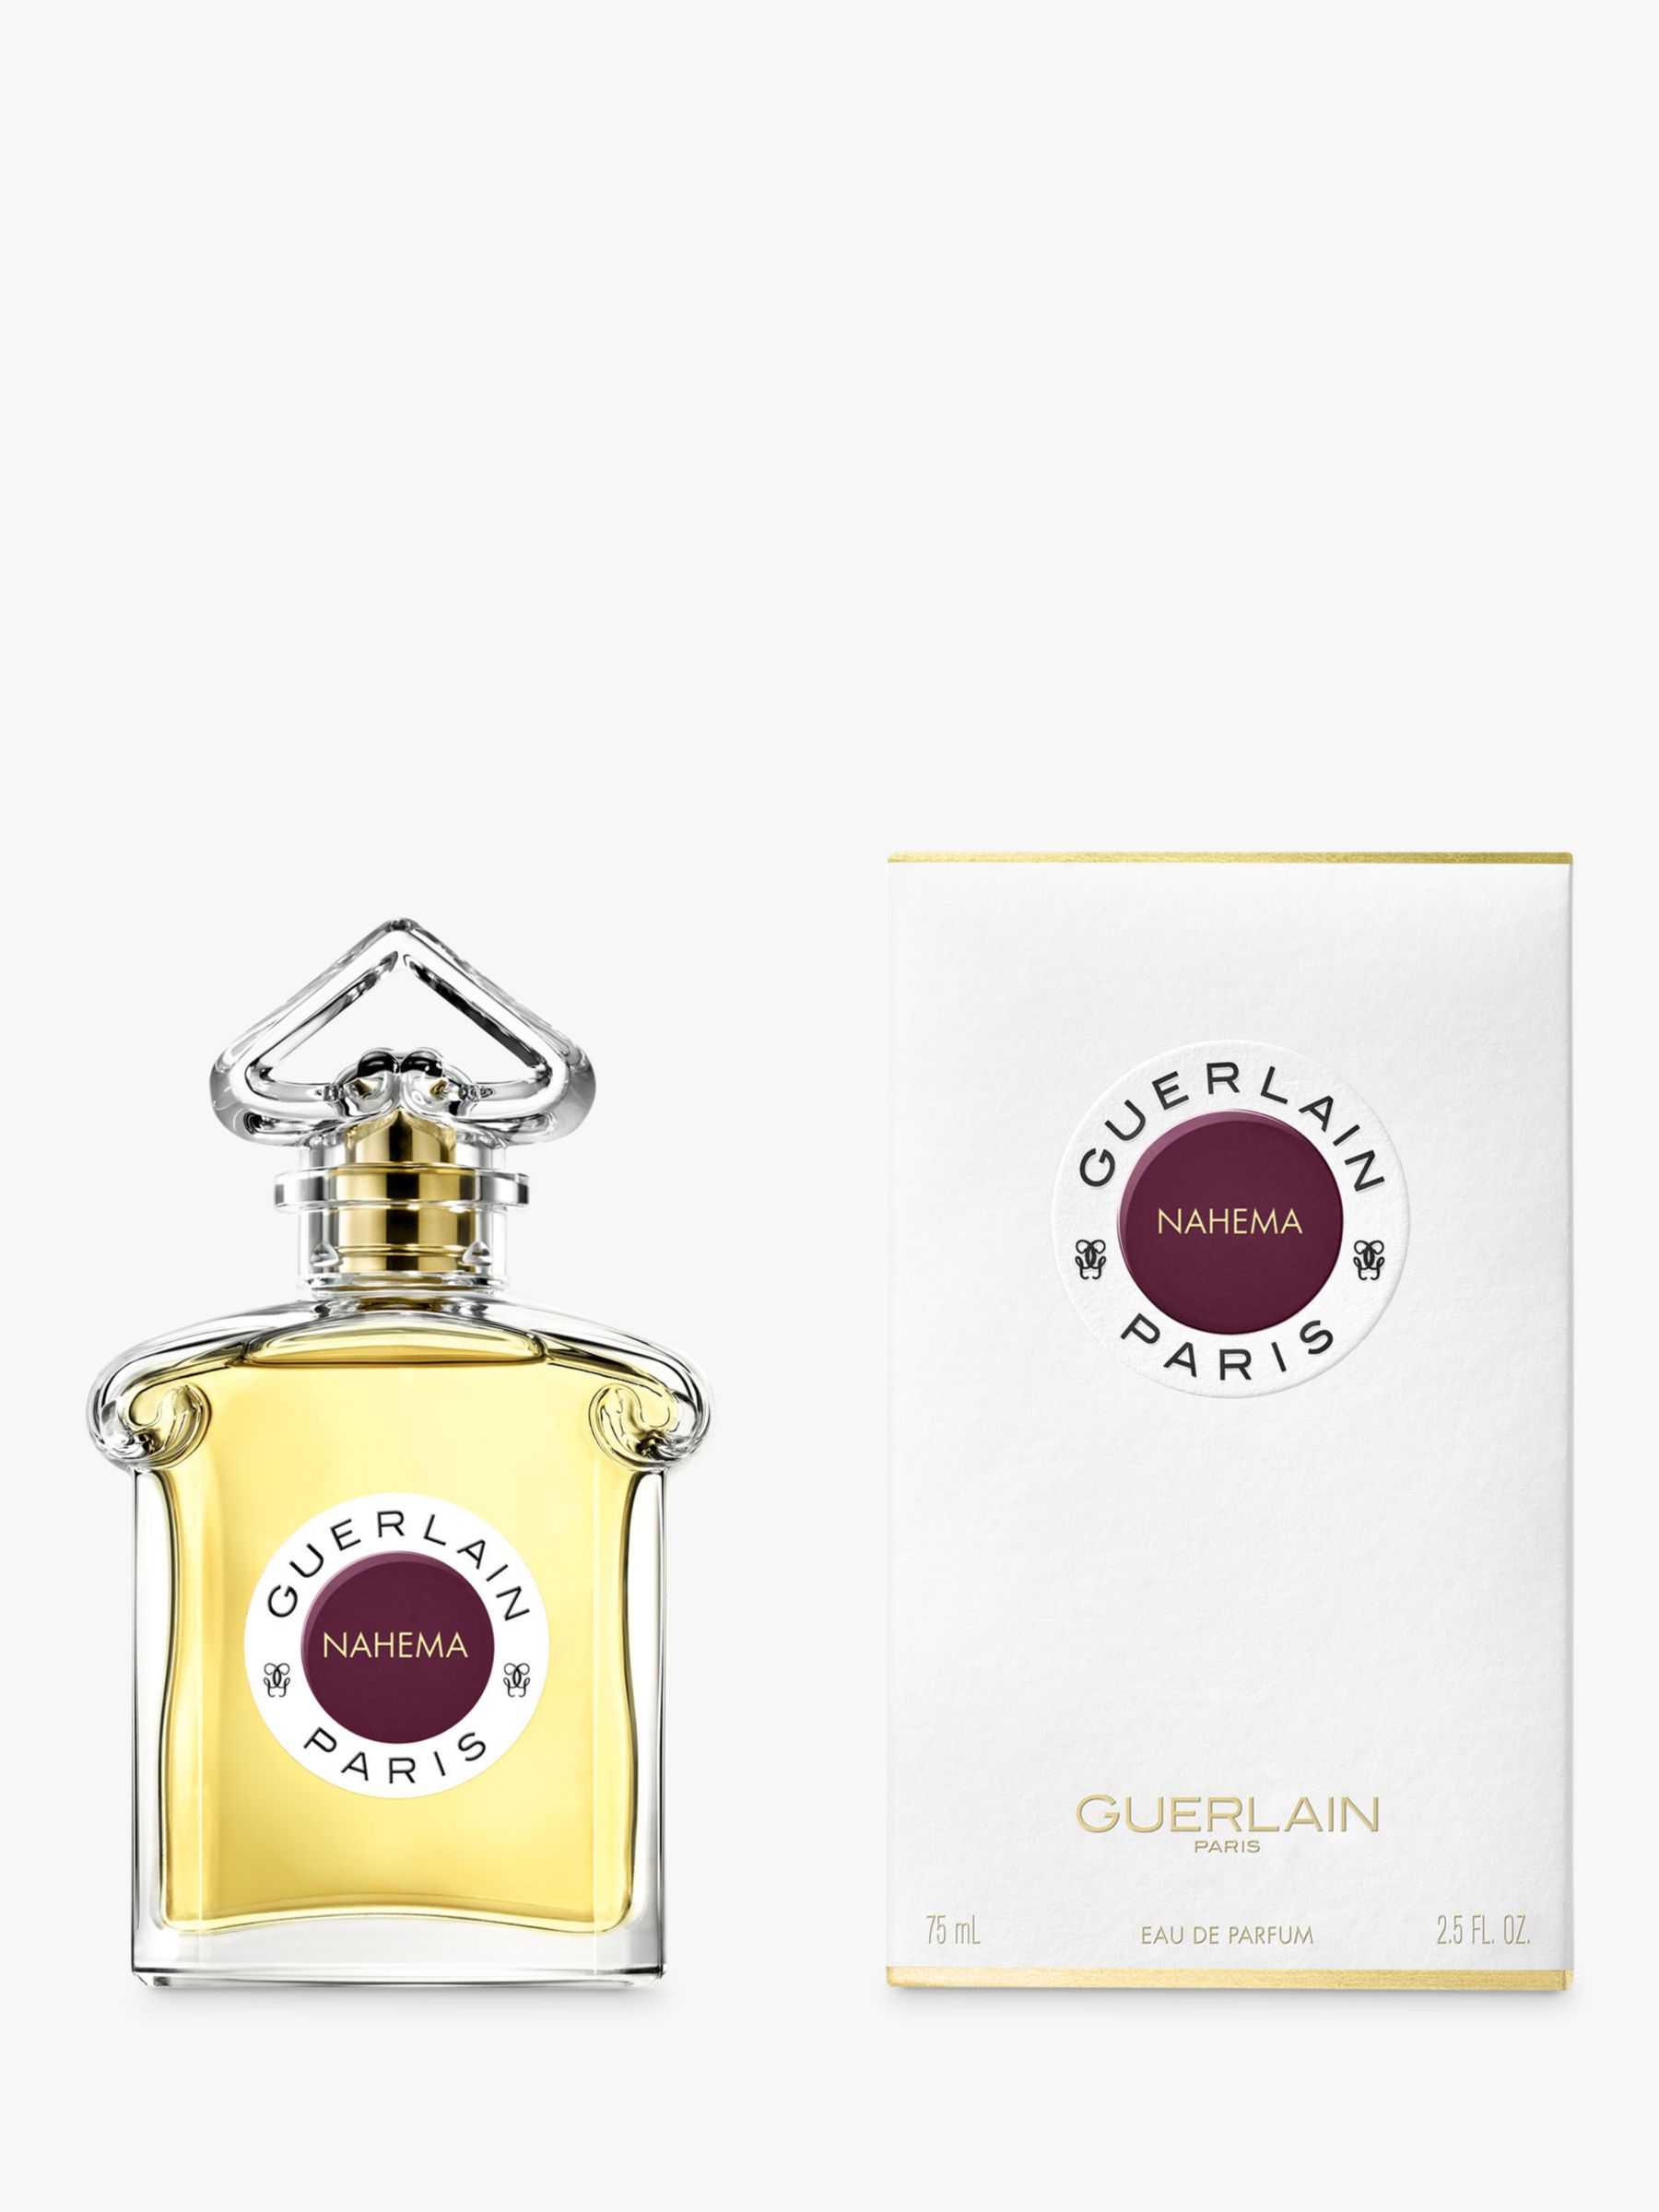 Guerlain Nahema Eau de Parfum, 75ml 8